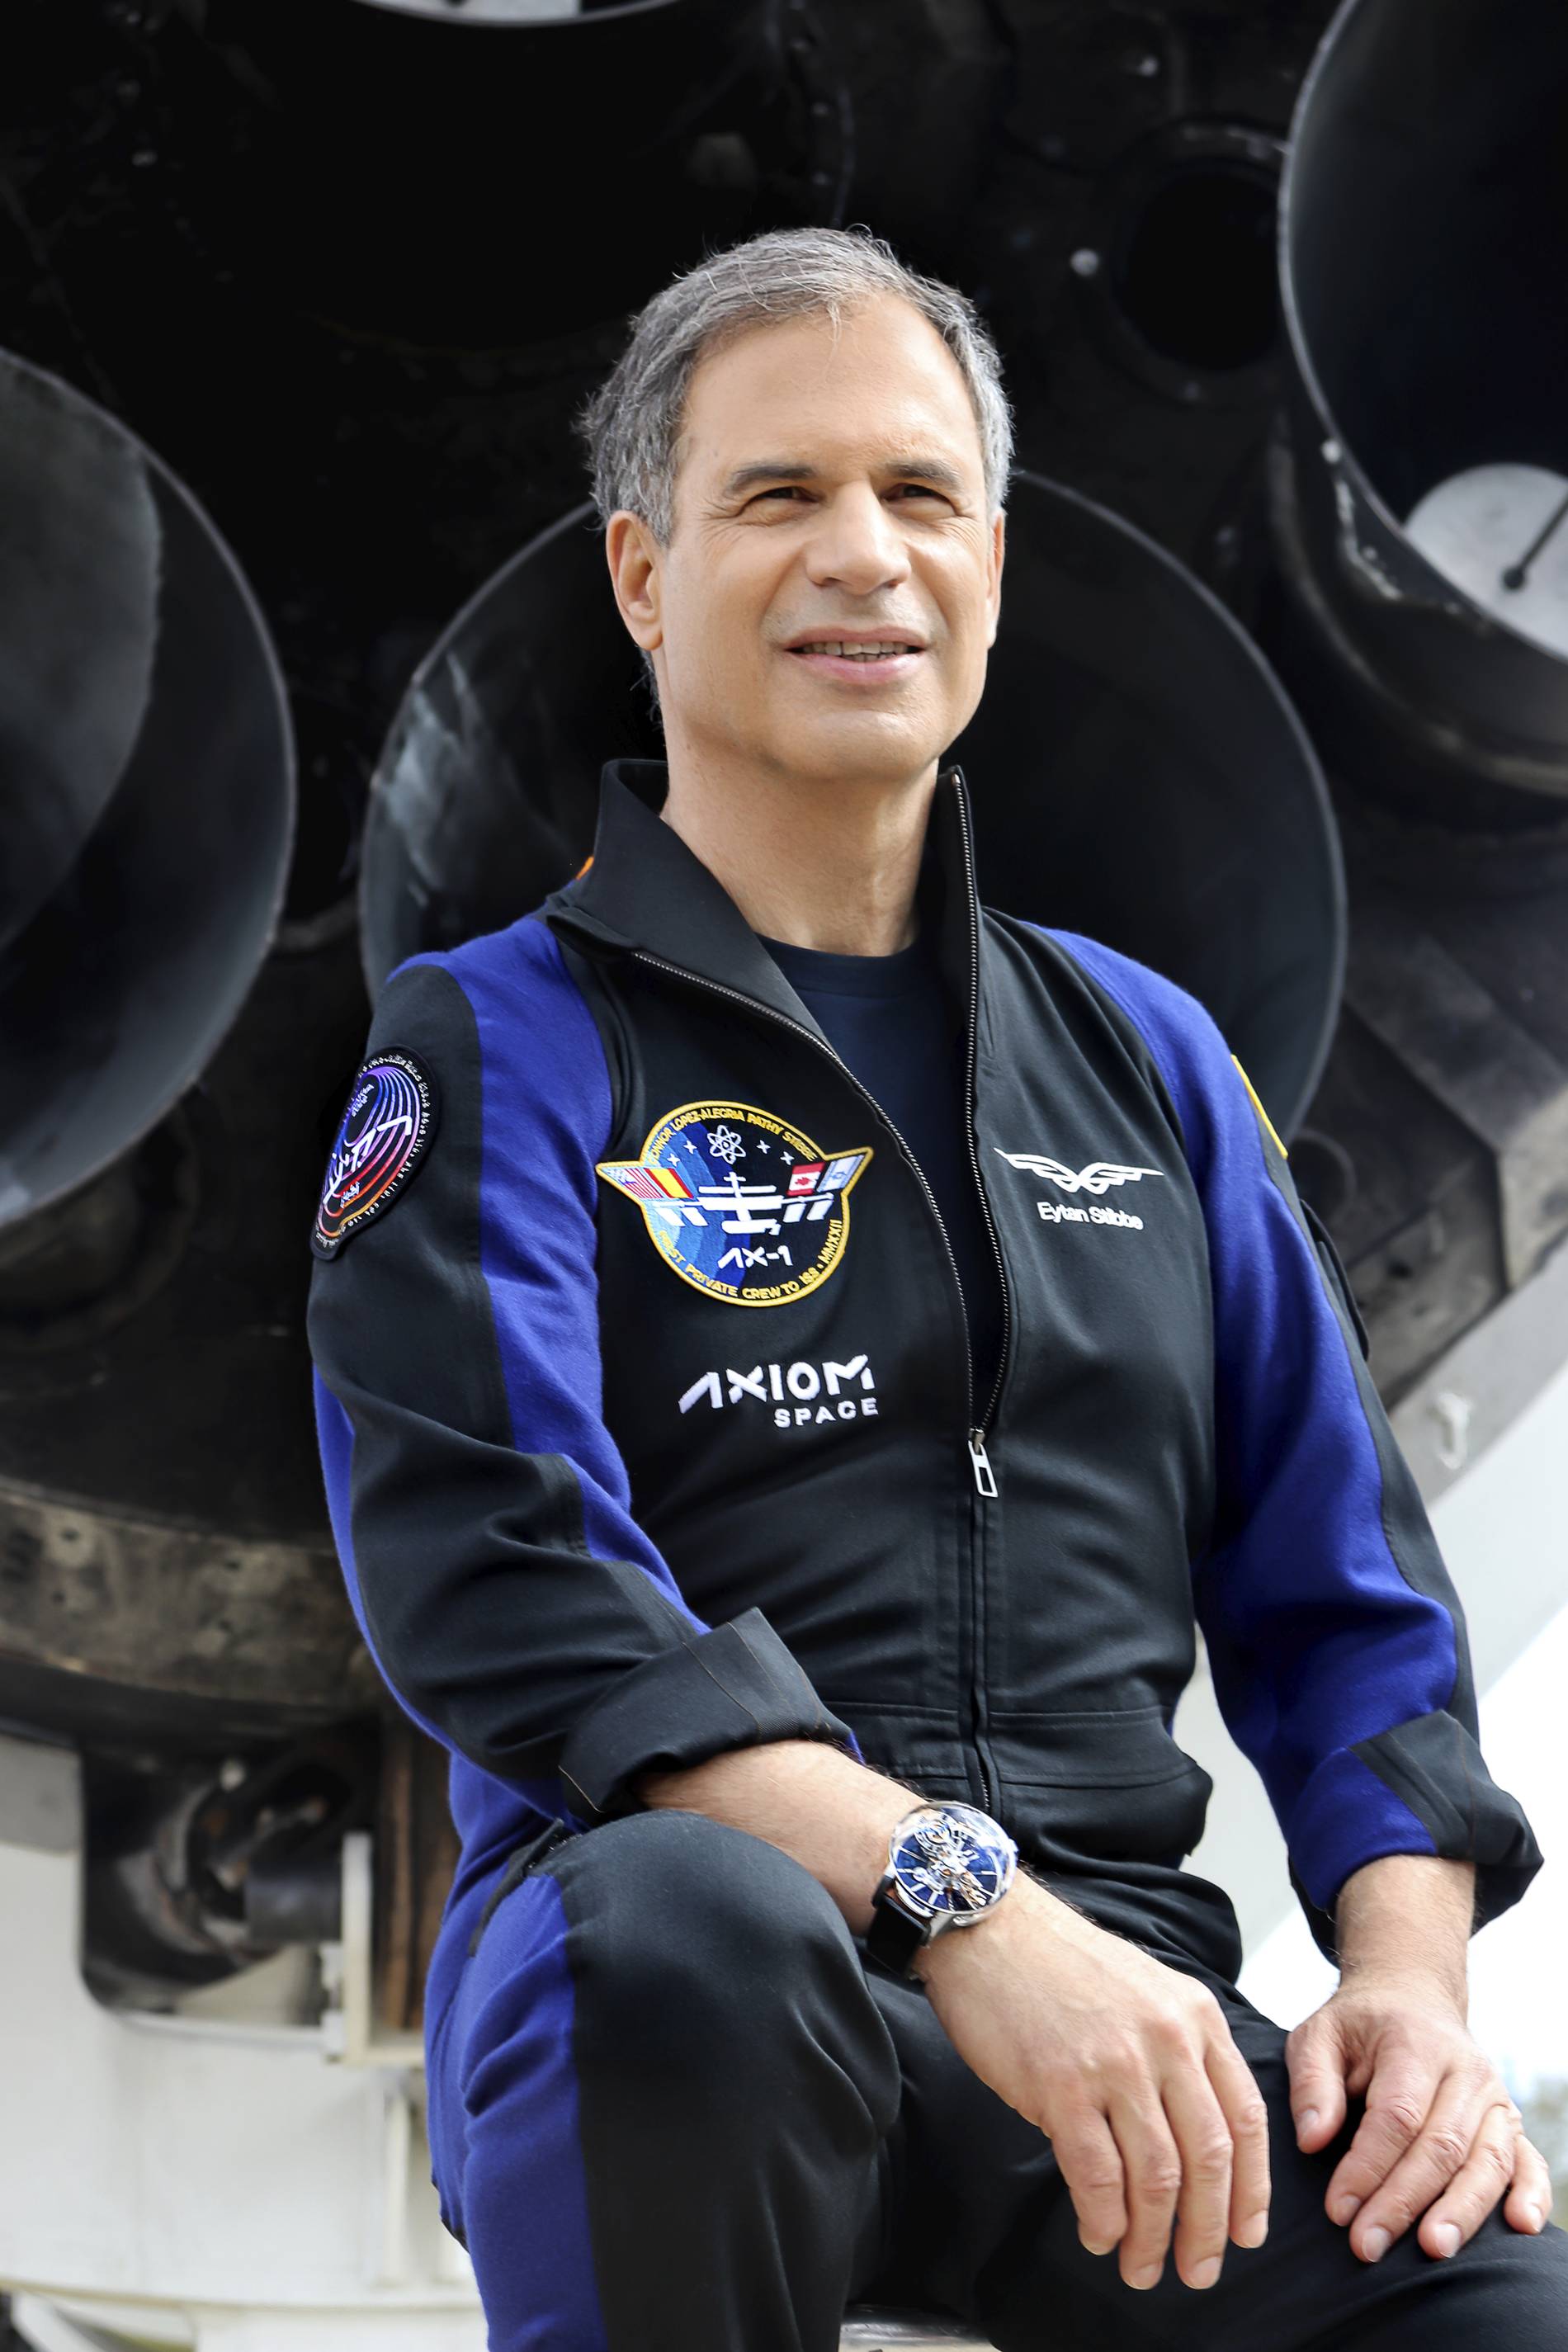 astronaut Eytan Stibbe 